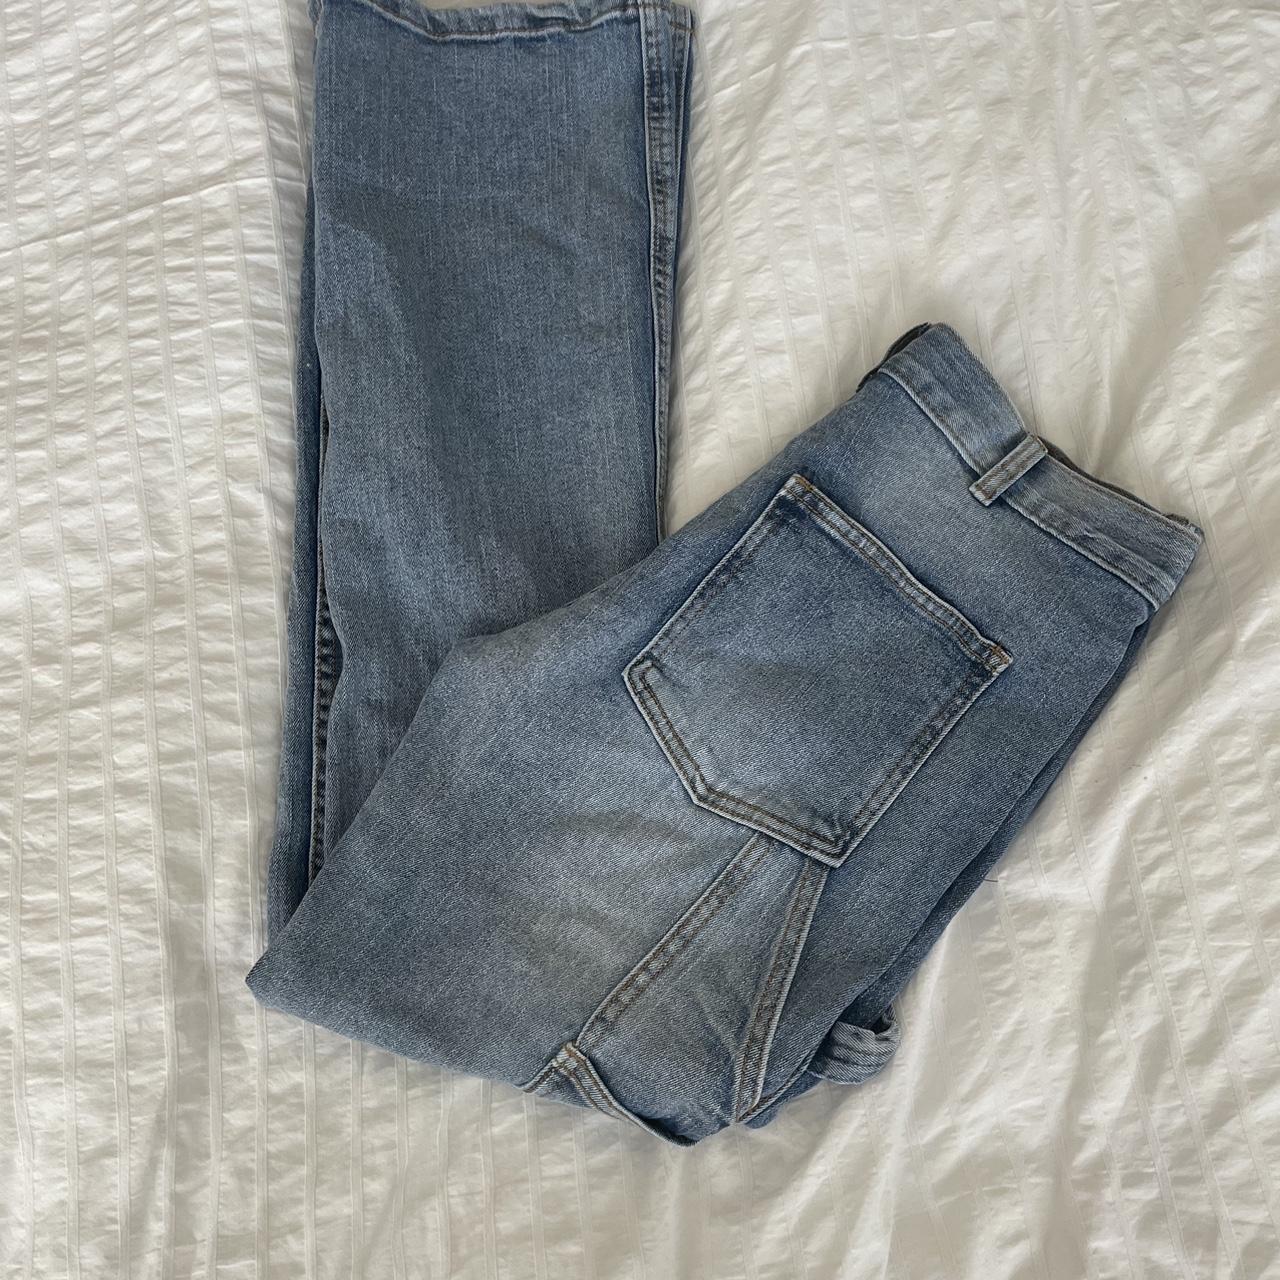 Brand new Brandy Melville flared carpenter jeans. I... - Depop